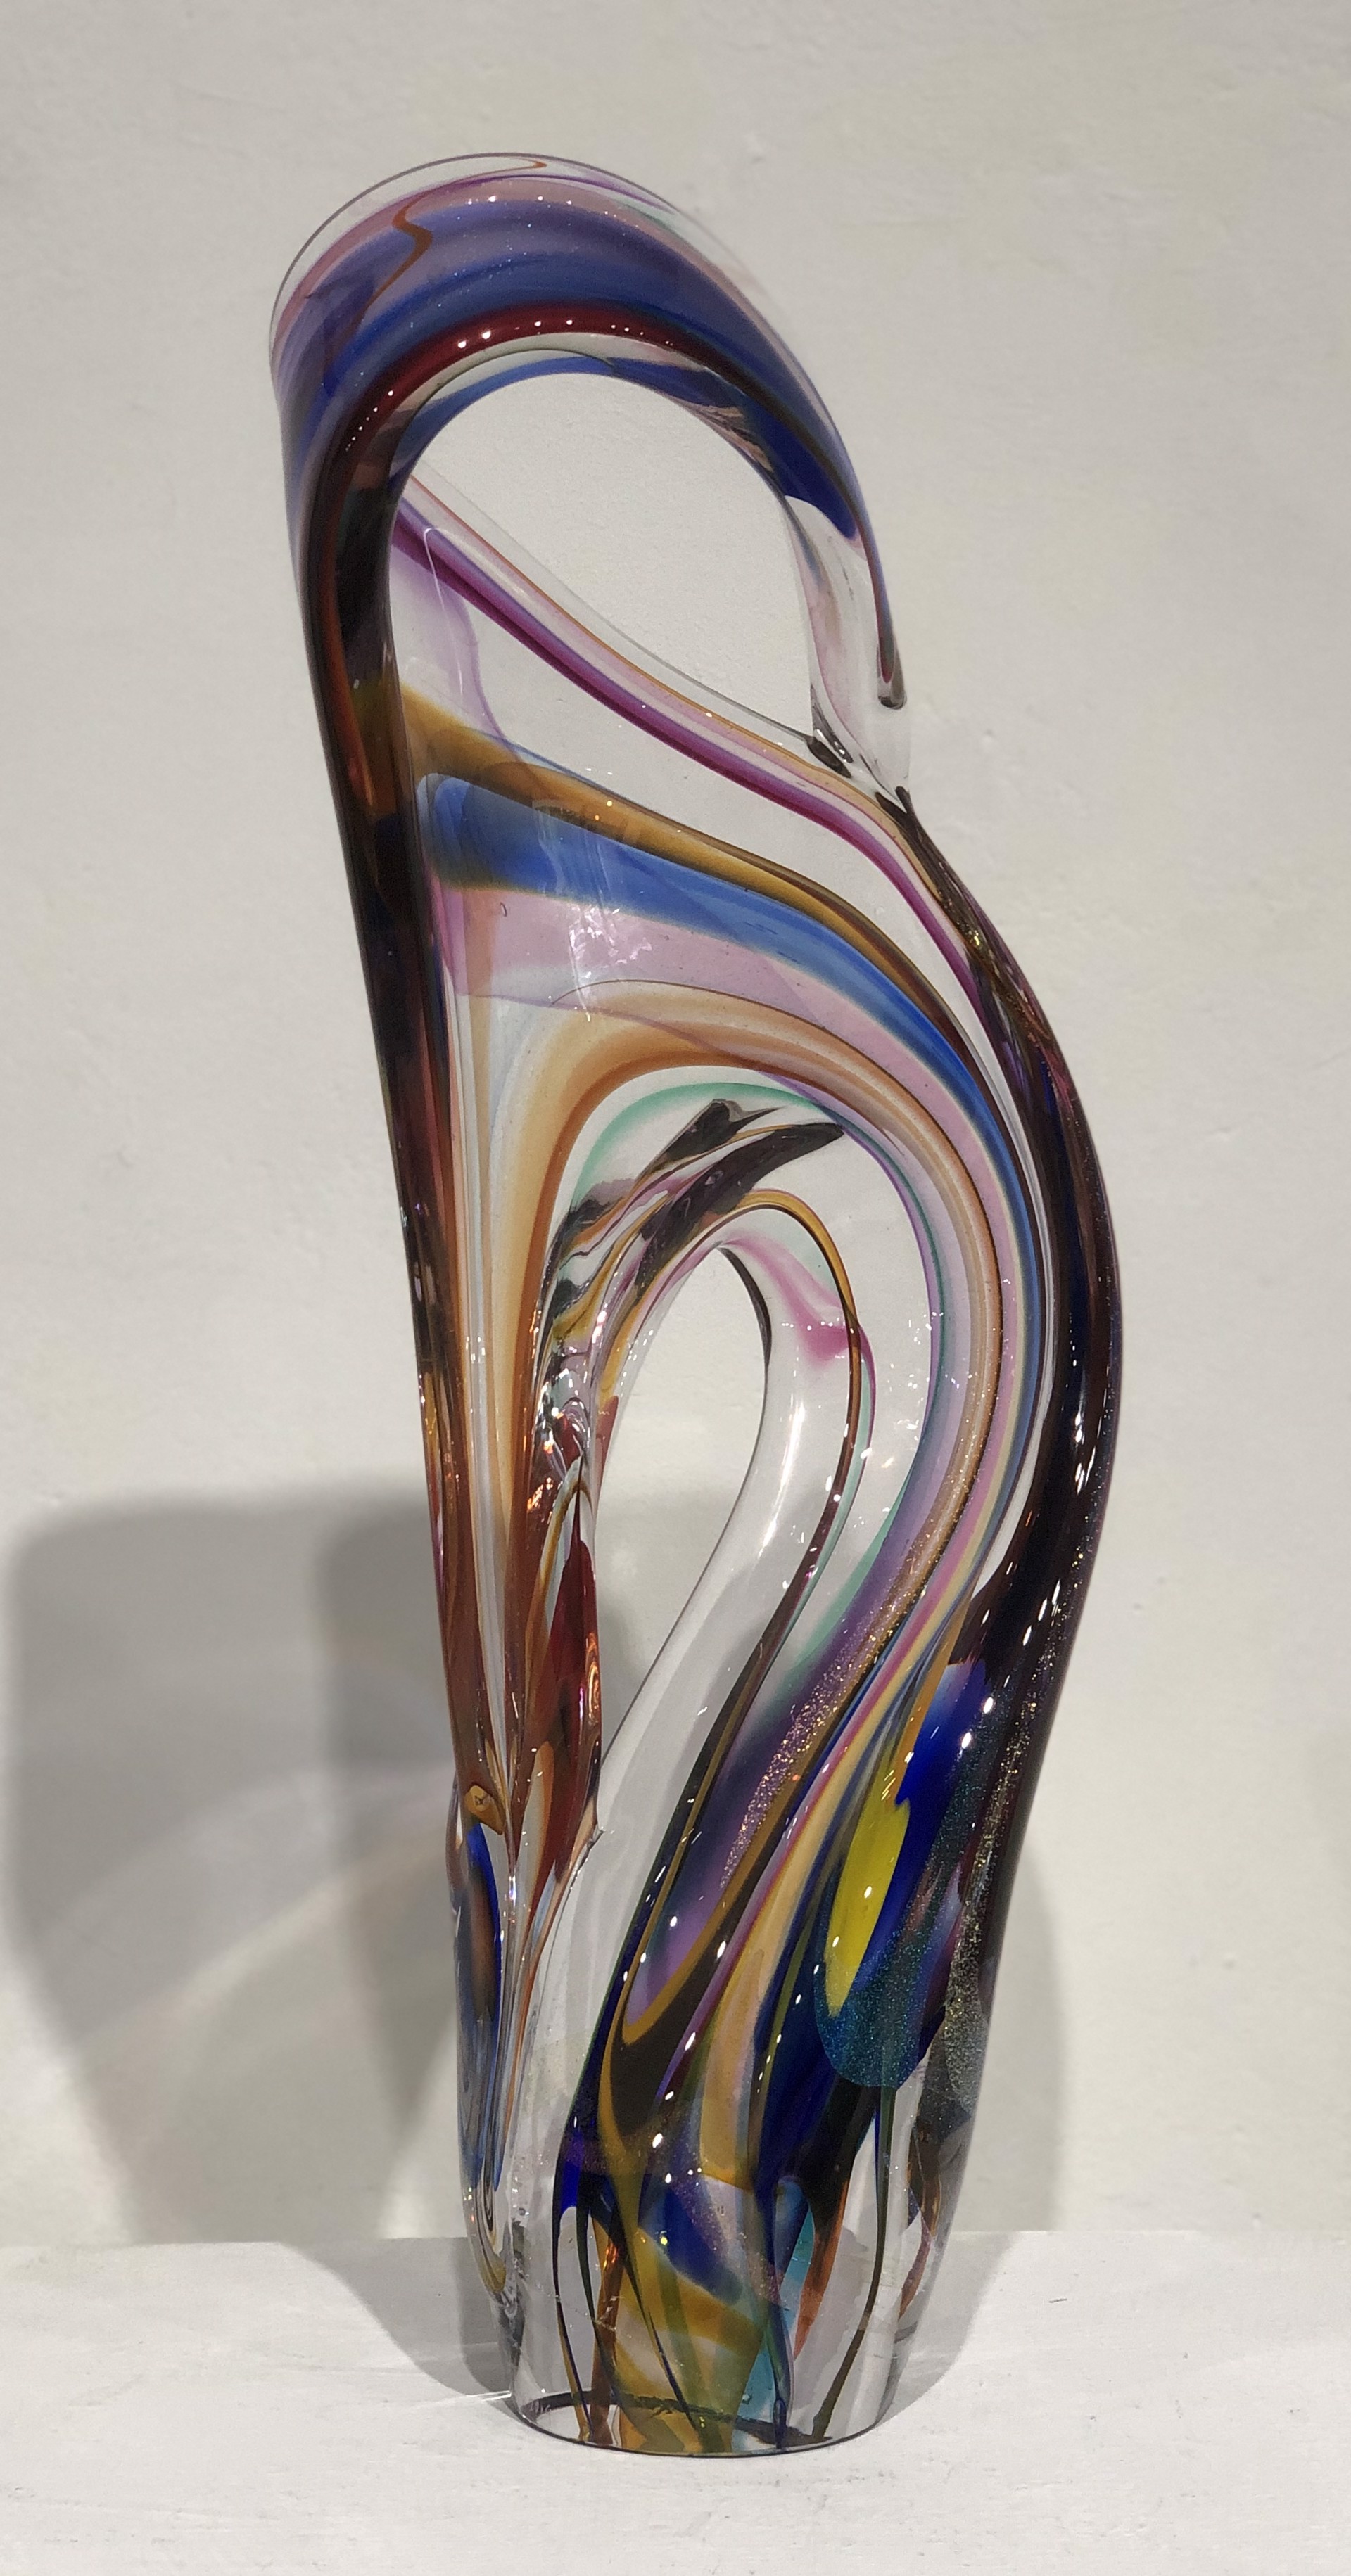 Double Loop Rainbow Arm by David Goldhagen